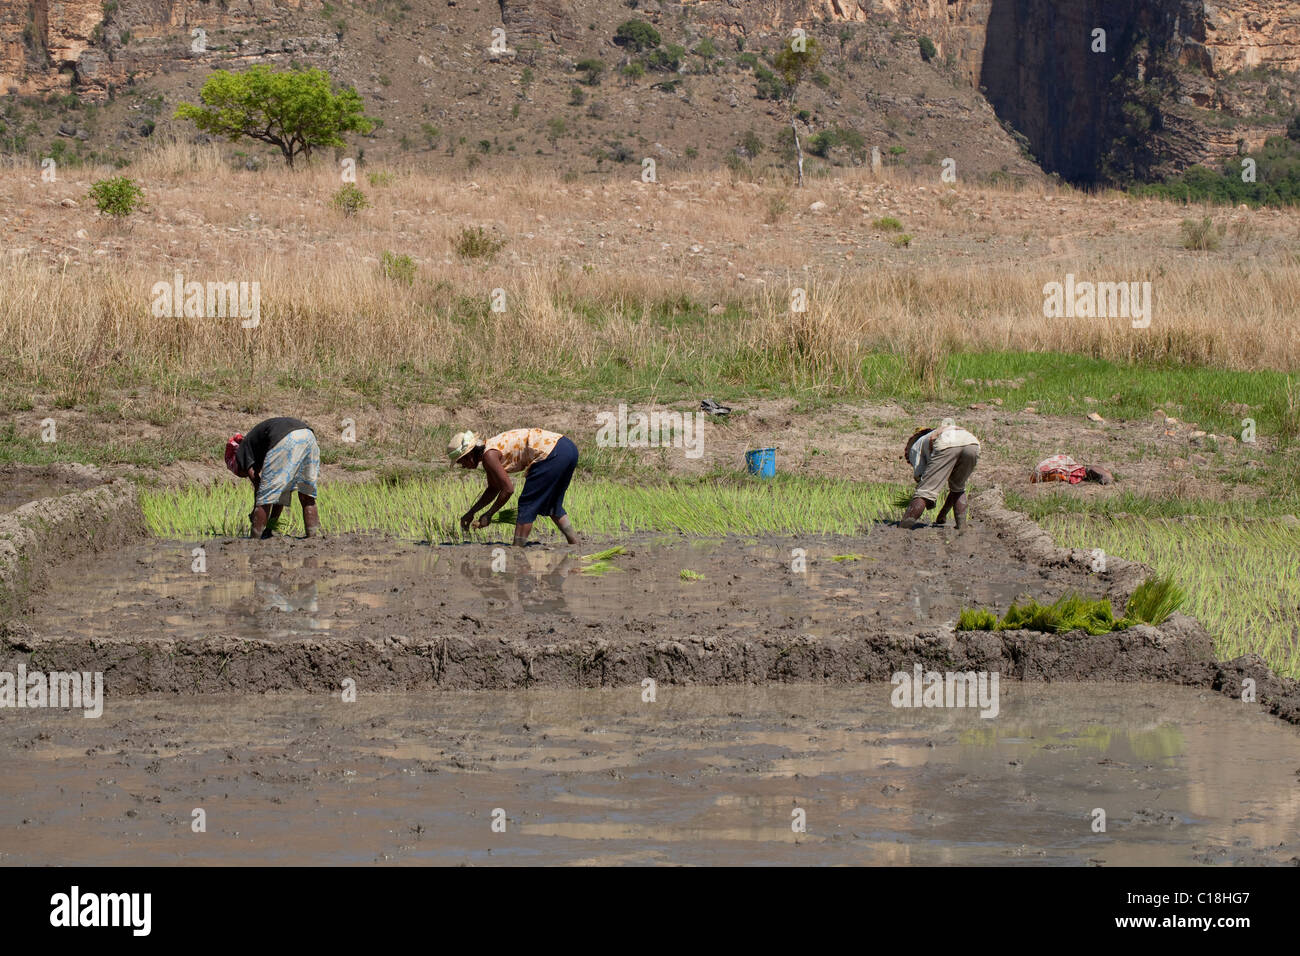 Women planting Rice (Oryza sativa) seedlings in recently prepared embanked paddy plots. Madagascar. Stock Photo